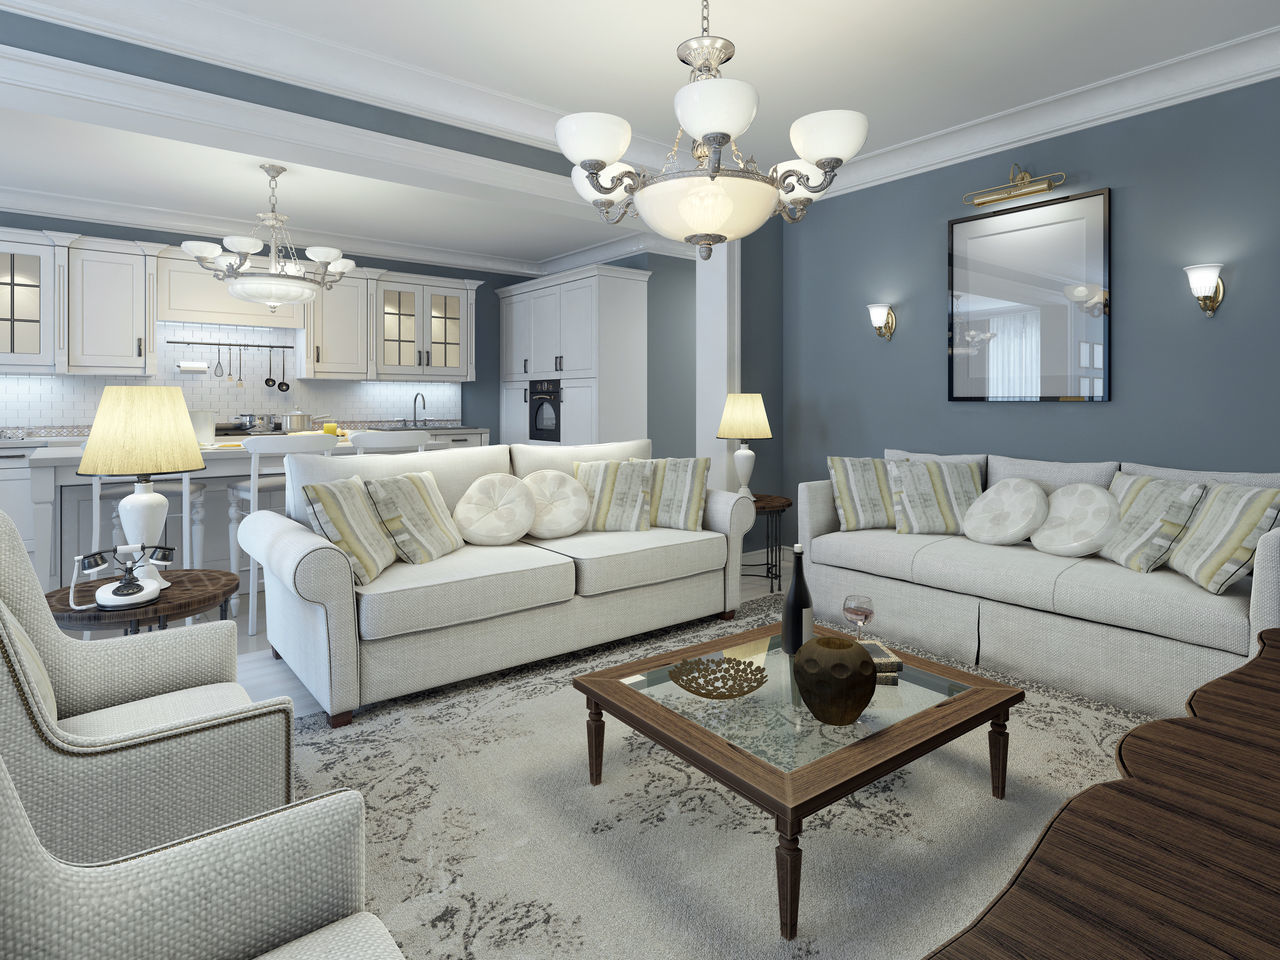 lighting fixtures for living room design ideas